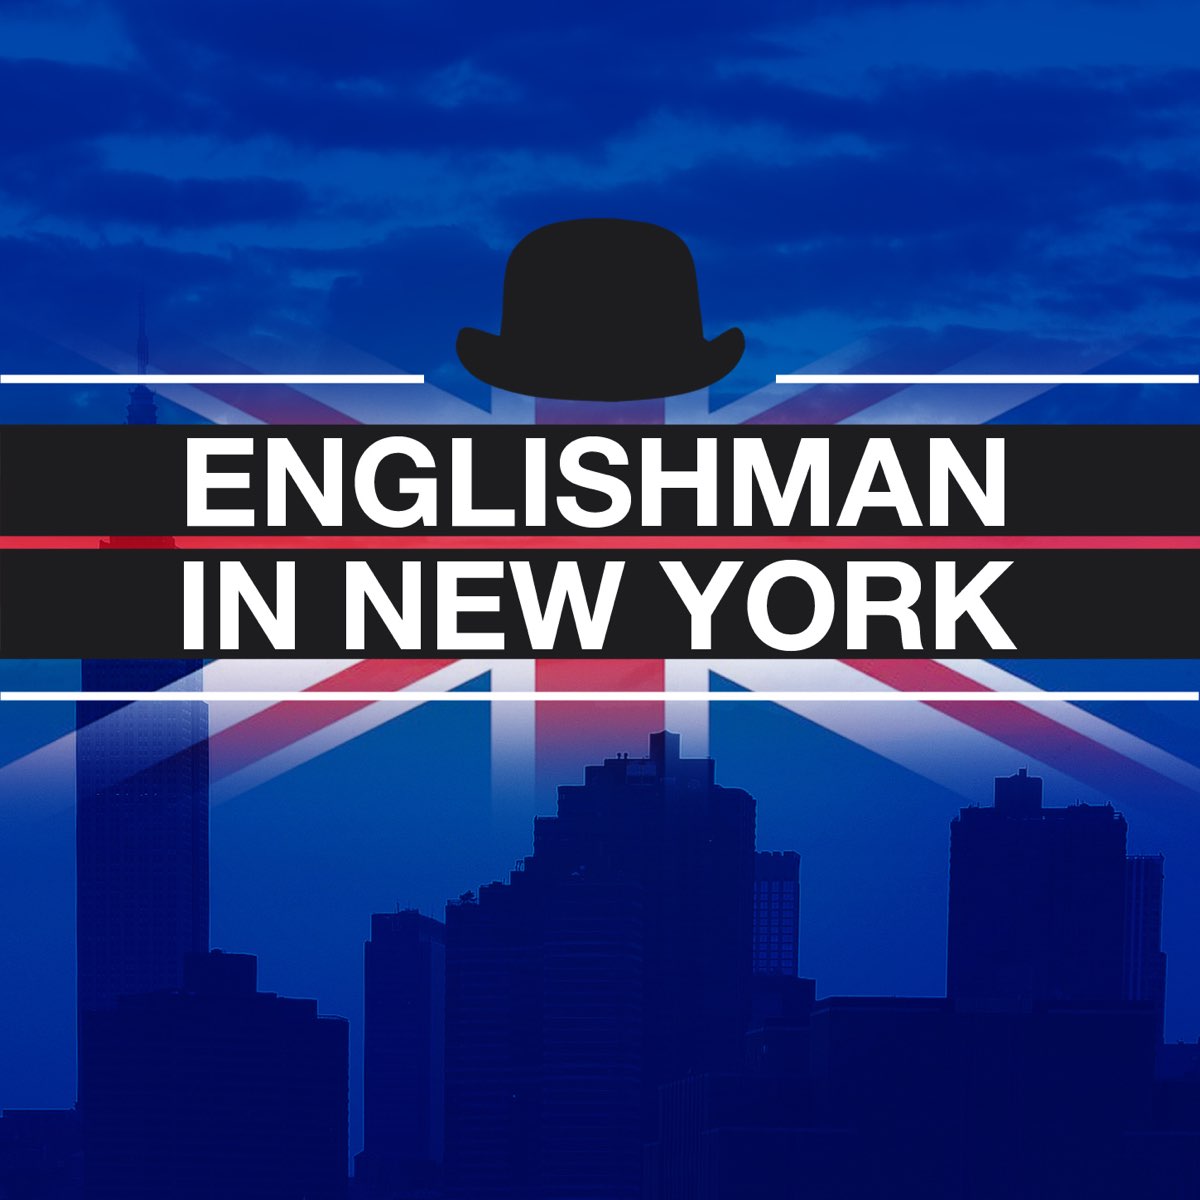 Инглиш мен ин. Инглиш Мэн. Englishman in New York обложка. Инглиш Мэн Мем. New York Orchestra логотип.